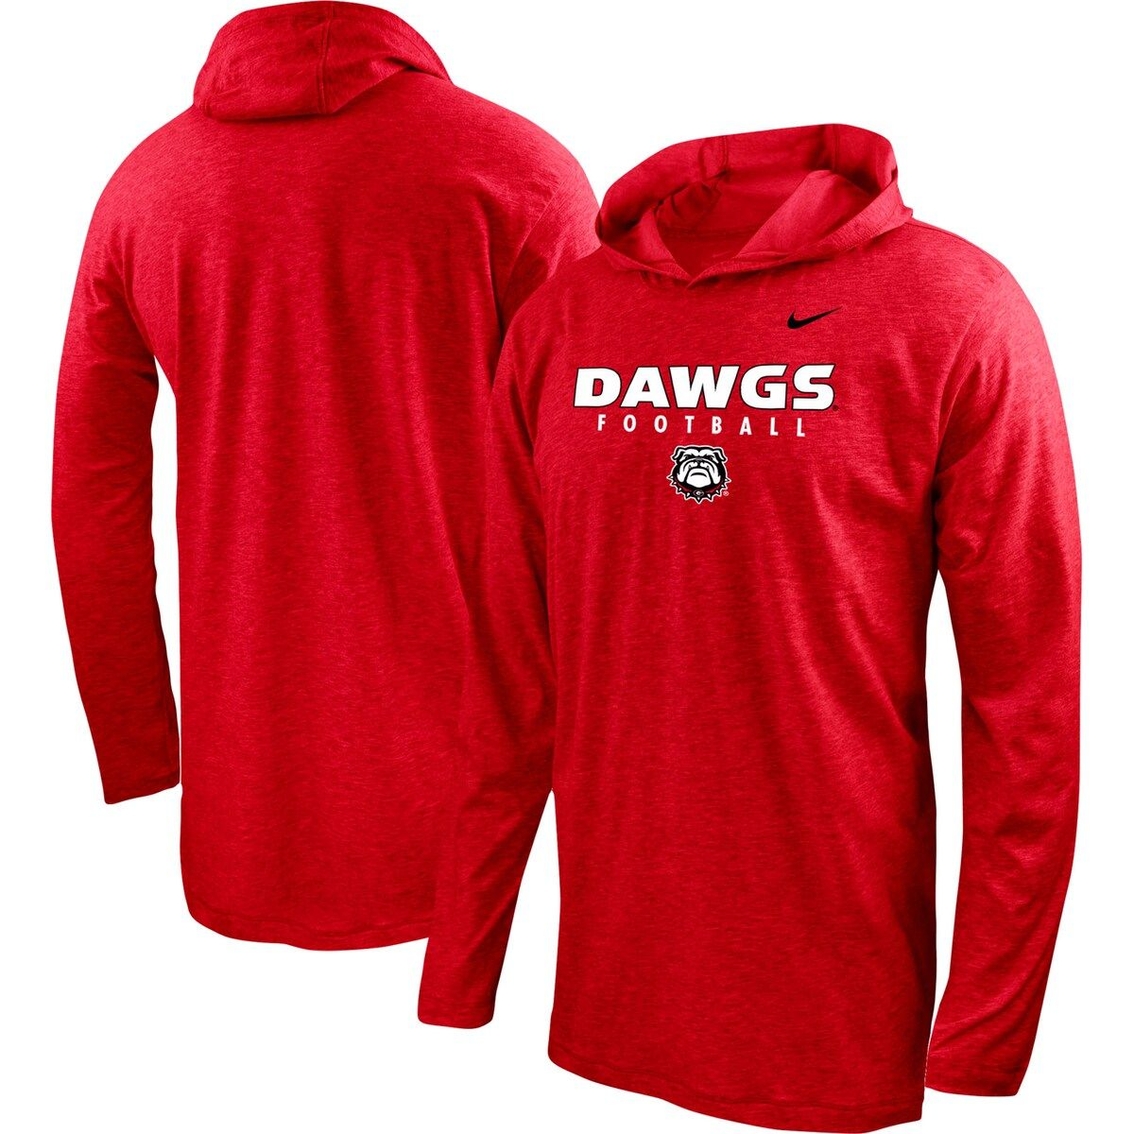 Nike Men's Red Georgia Bulldogs Football Long Sleeve Hoodie T-Shirt - Image 2 of 4